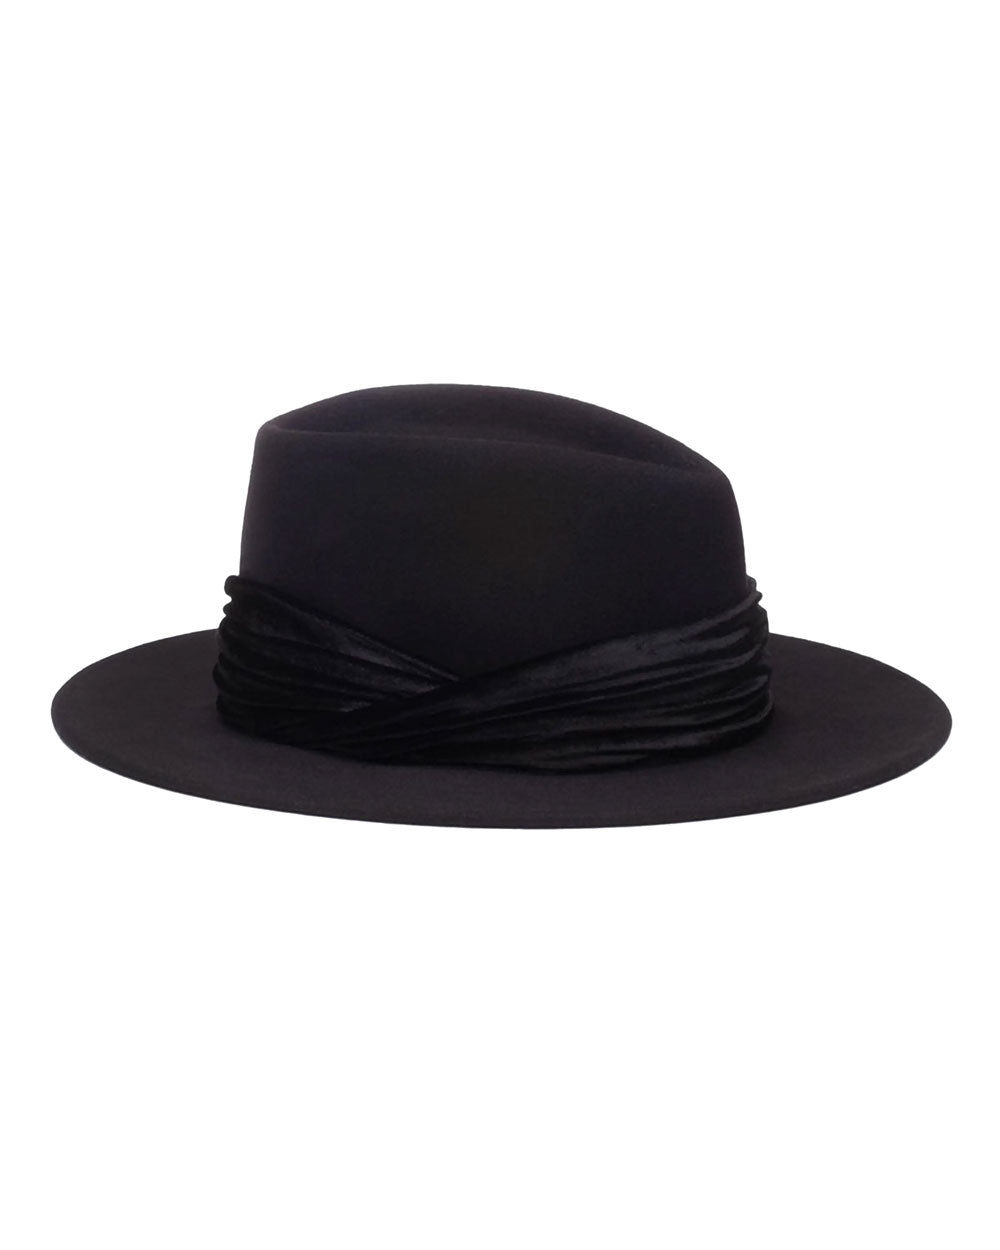 Eugenia Kim Blaine Wool Fedora Hat in Black – Stanley Korshak